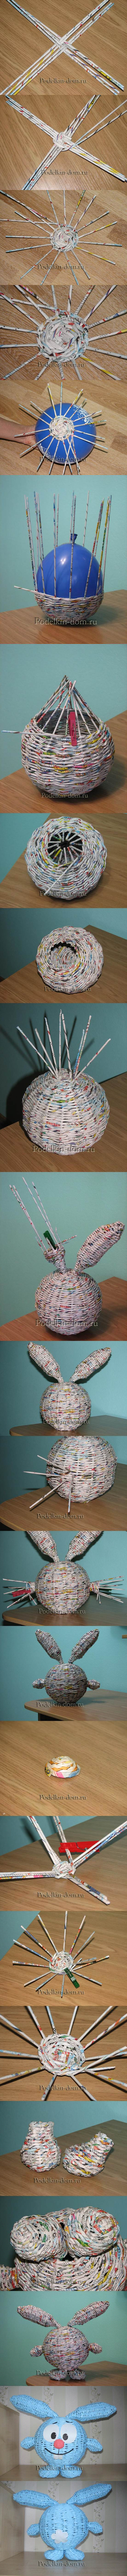 DIY Cute Woven Paper Rabbit 2